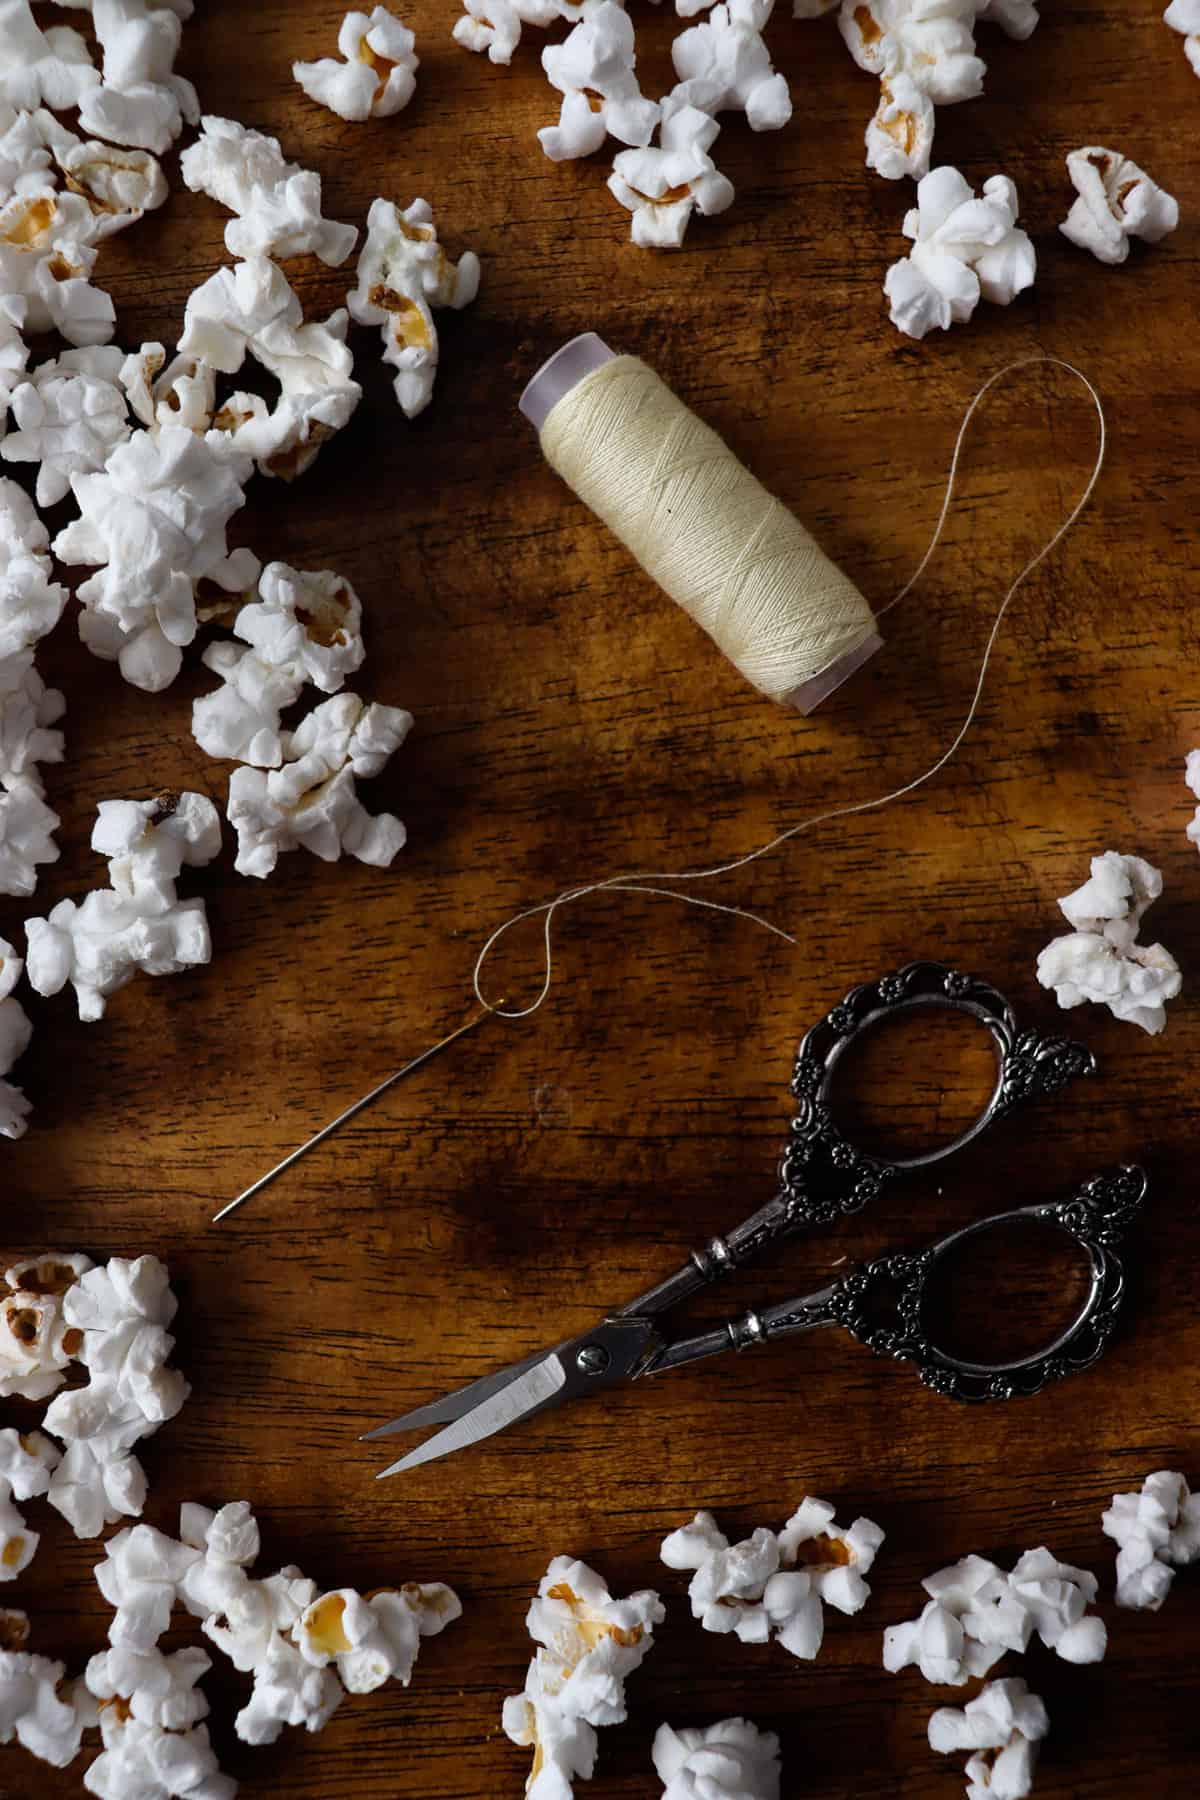 popcorn, scissors, string, and thread